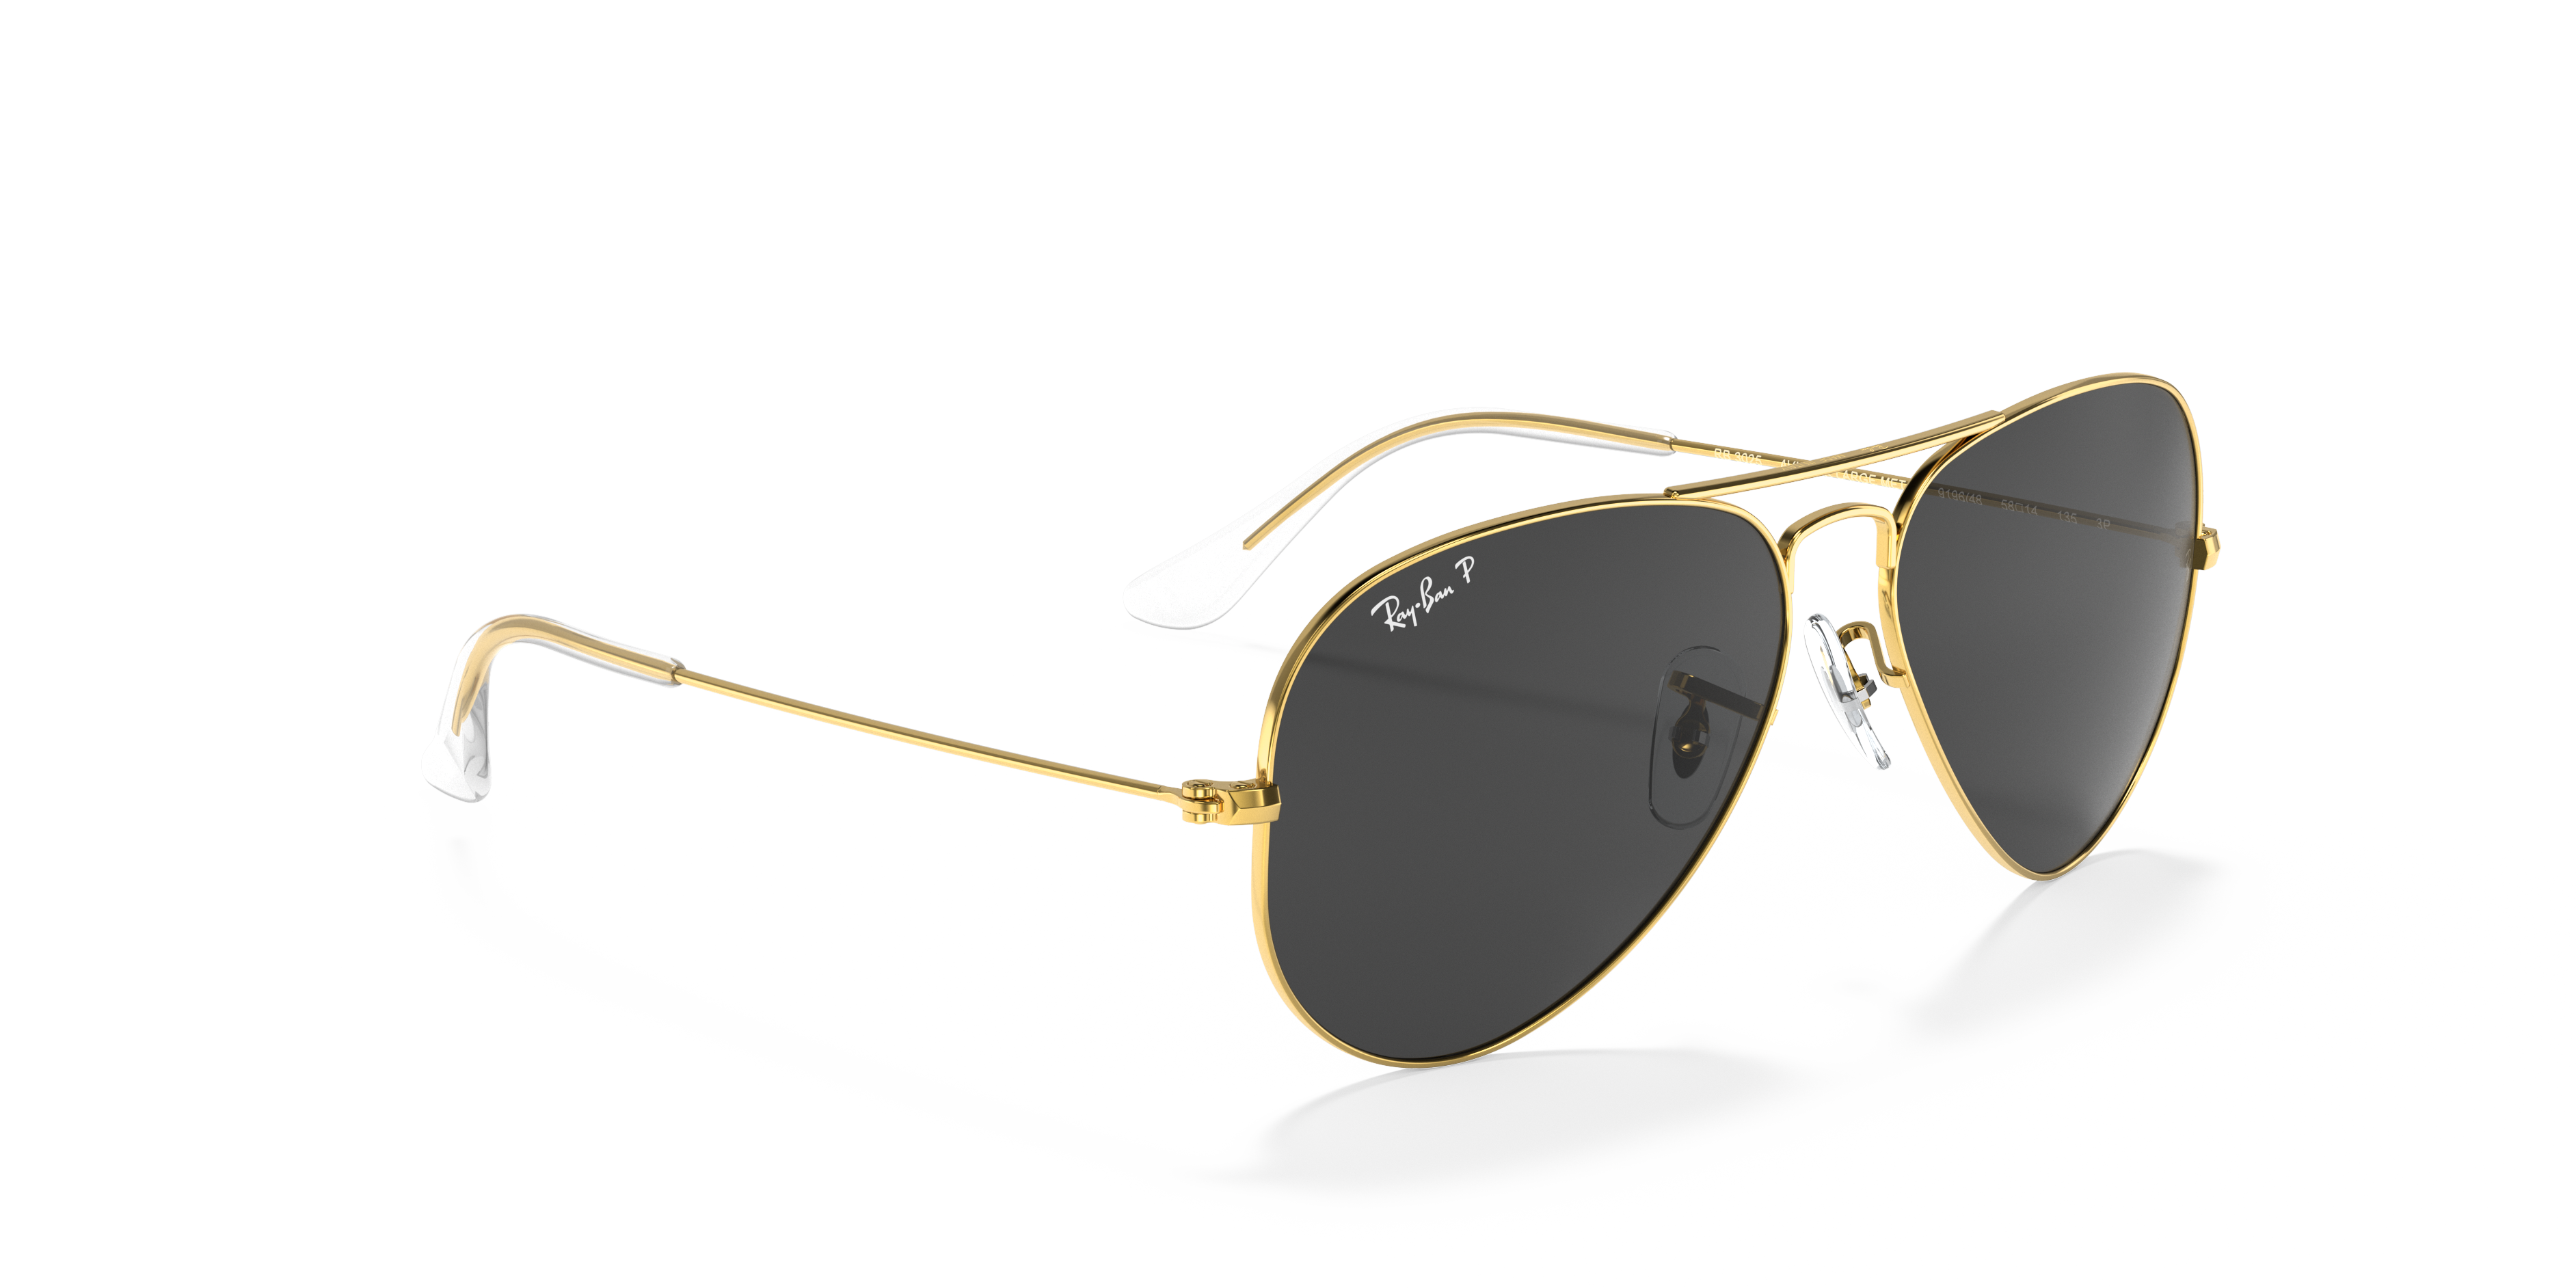 ray ban black and gold sunglasses